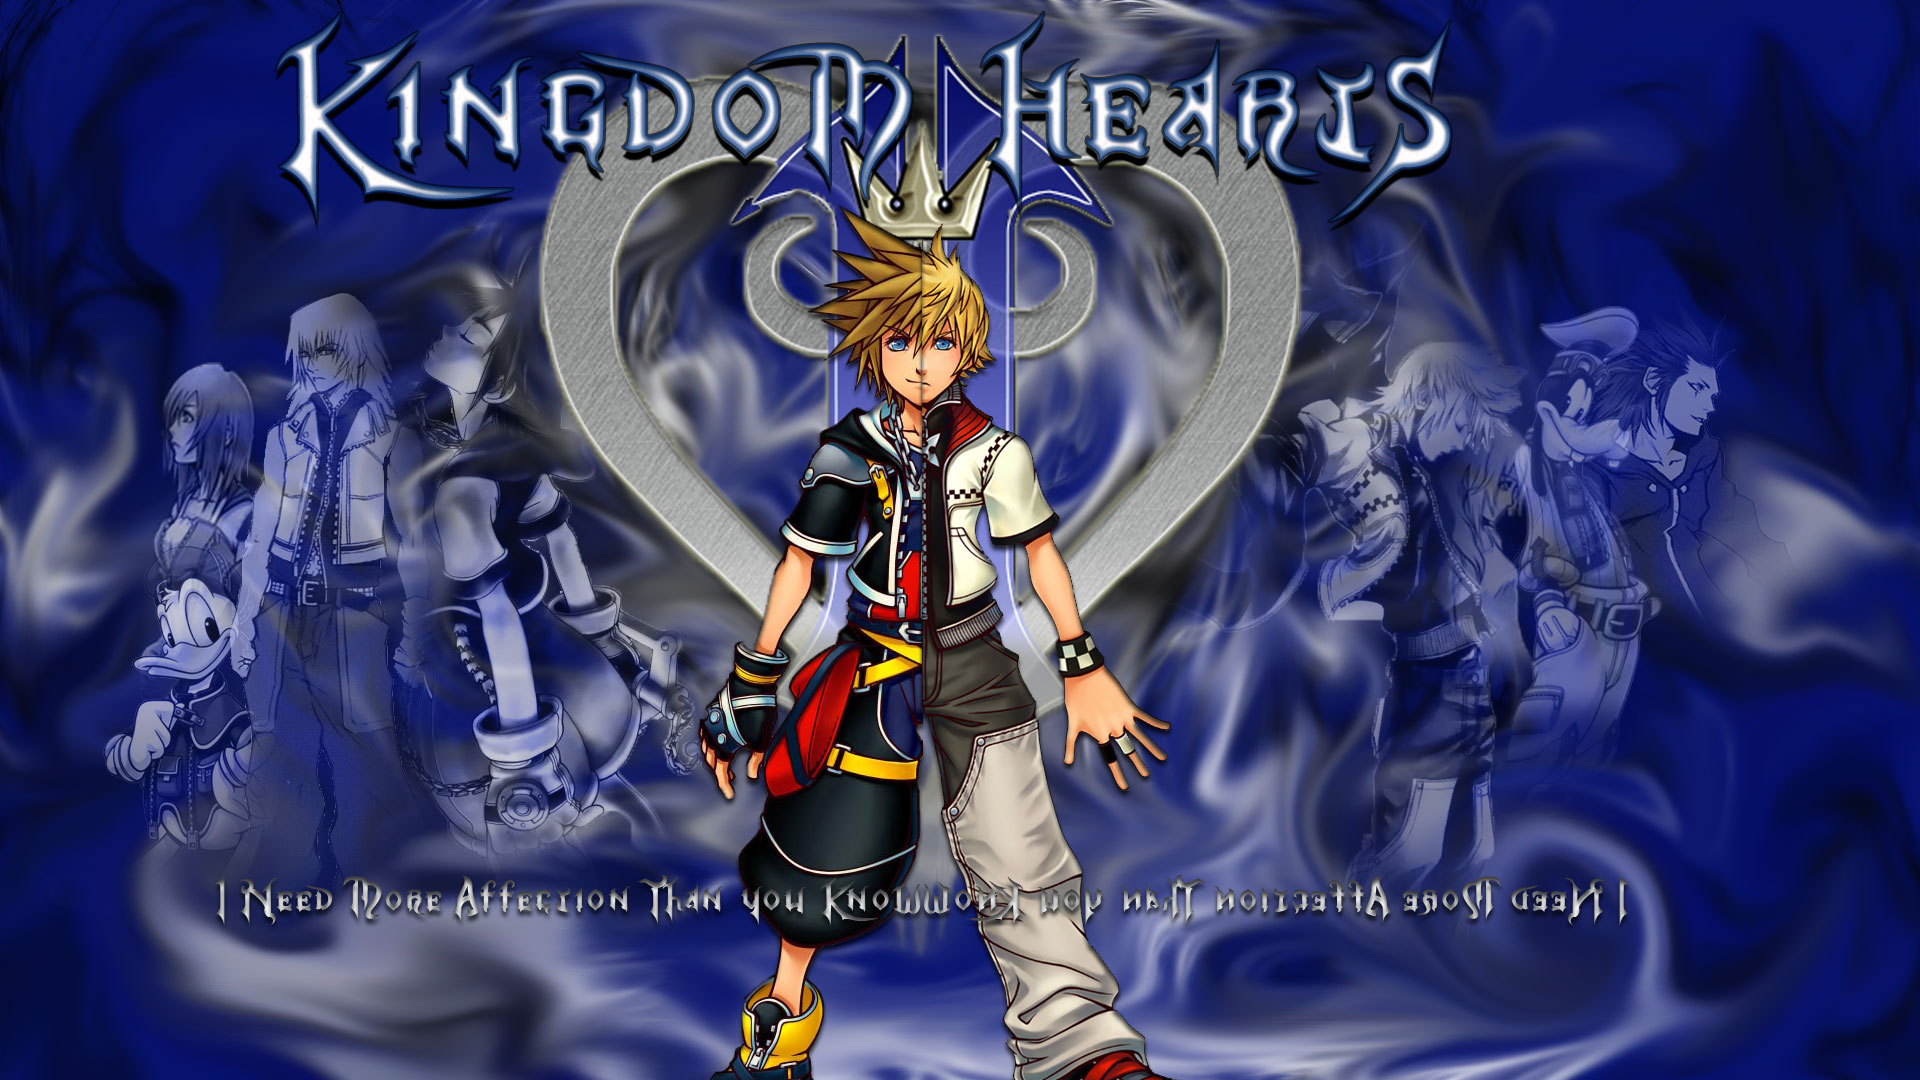 Kingdom Hearts Background wallpaper 145152 1920x1080